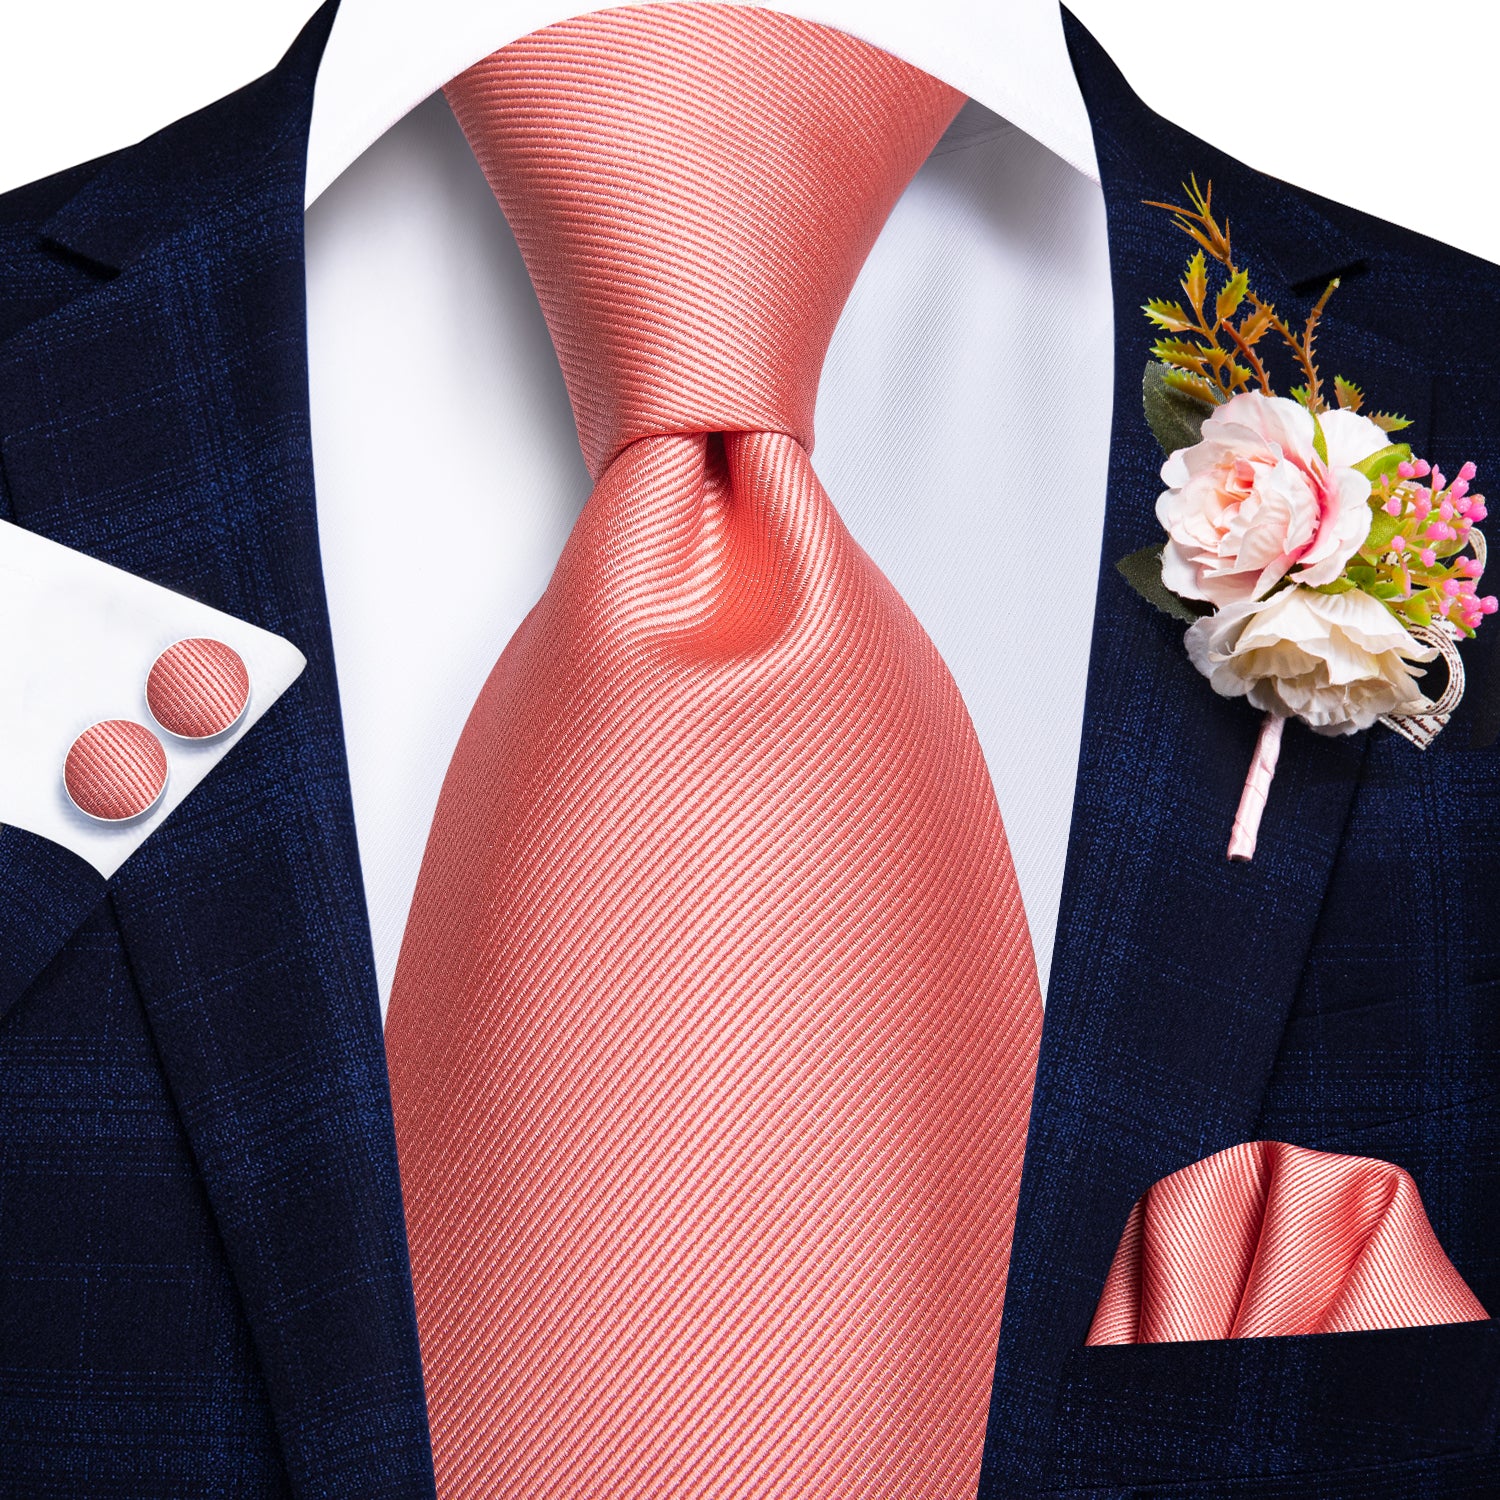 Coral solid Tie Handkerchief Cufflinks Set with Wedding Brooch